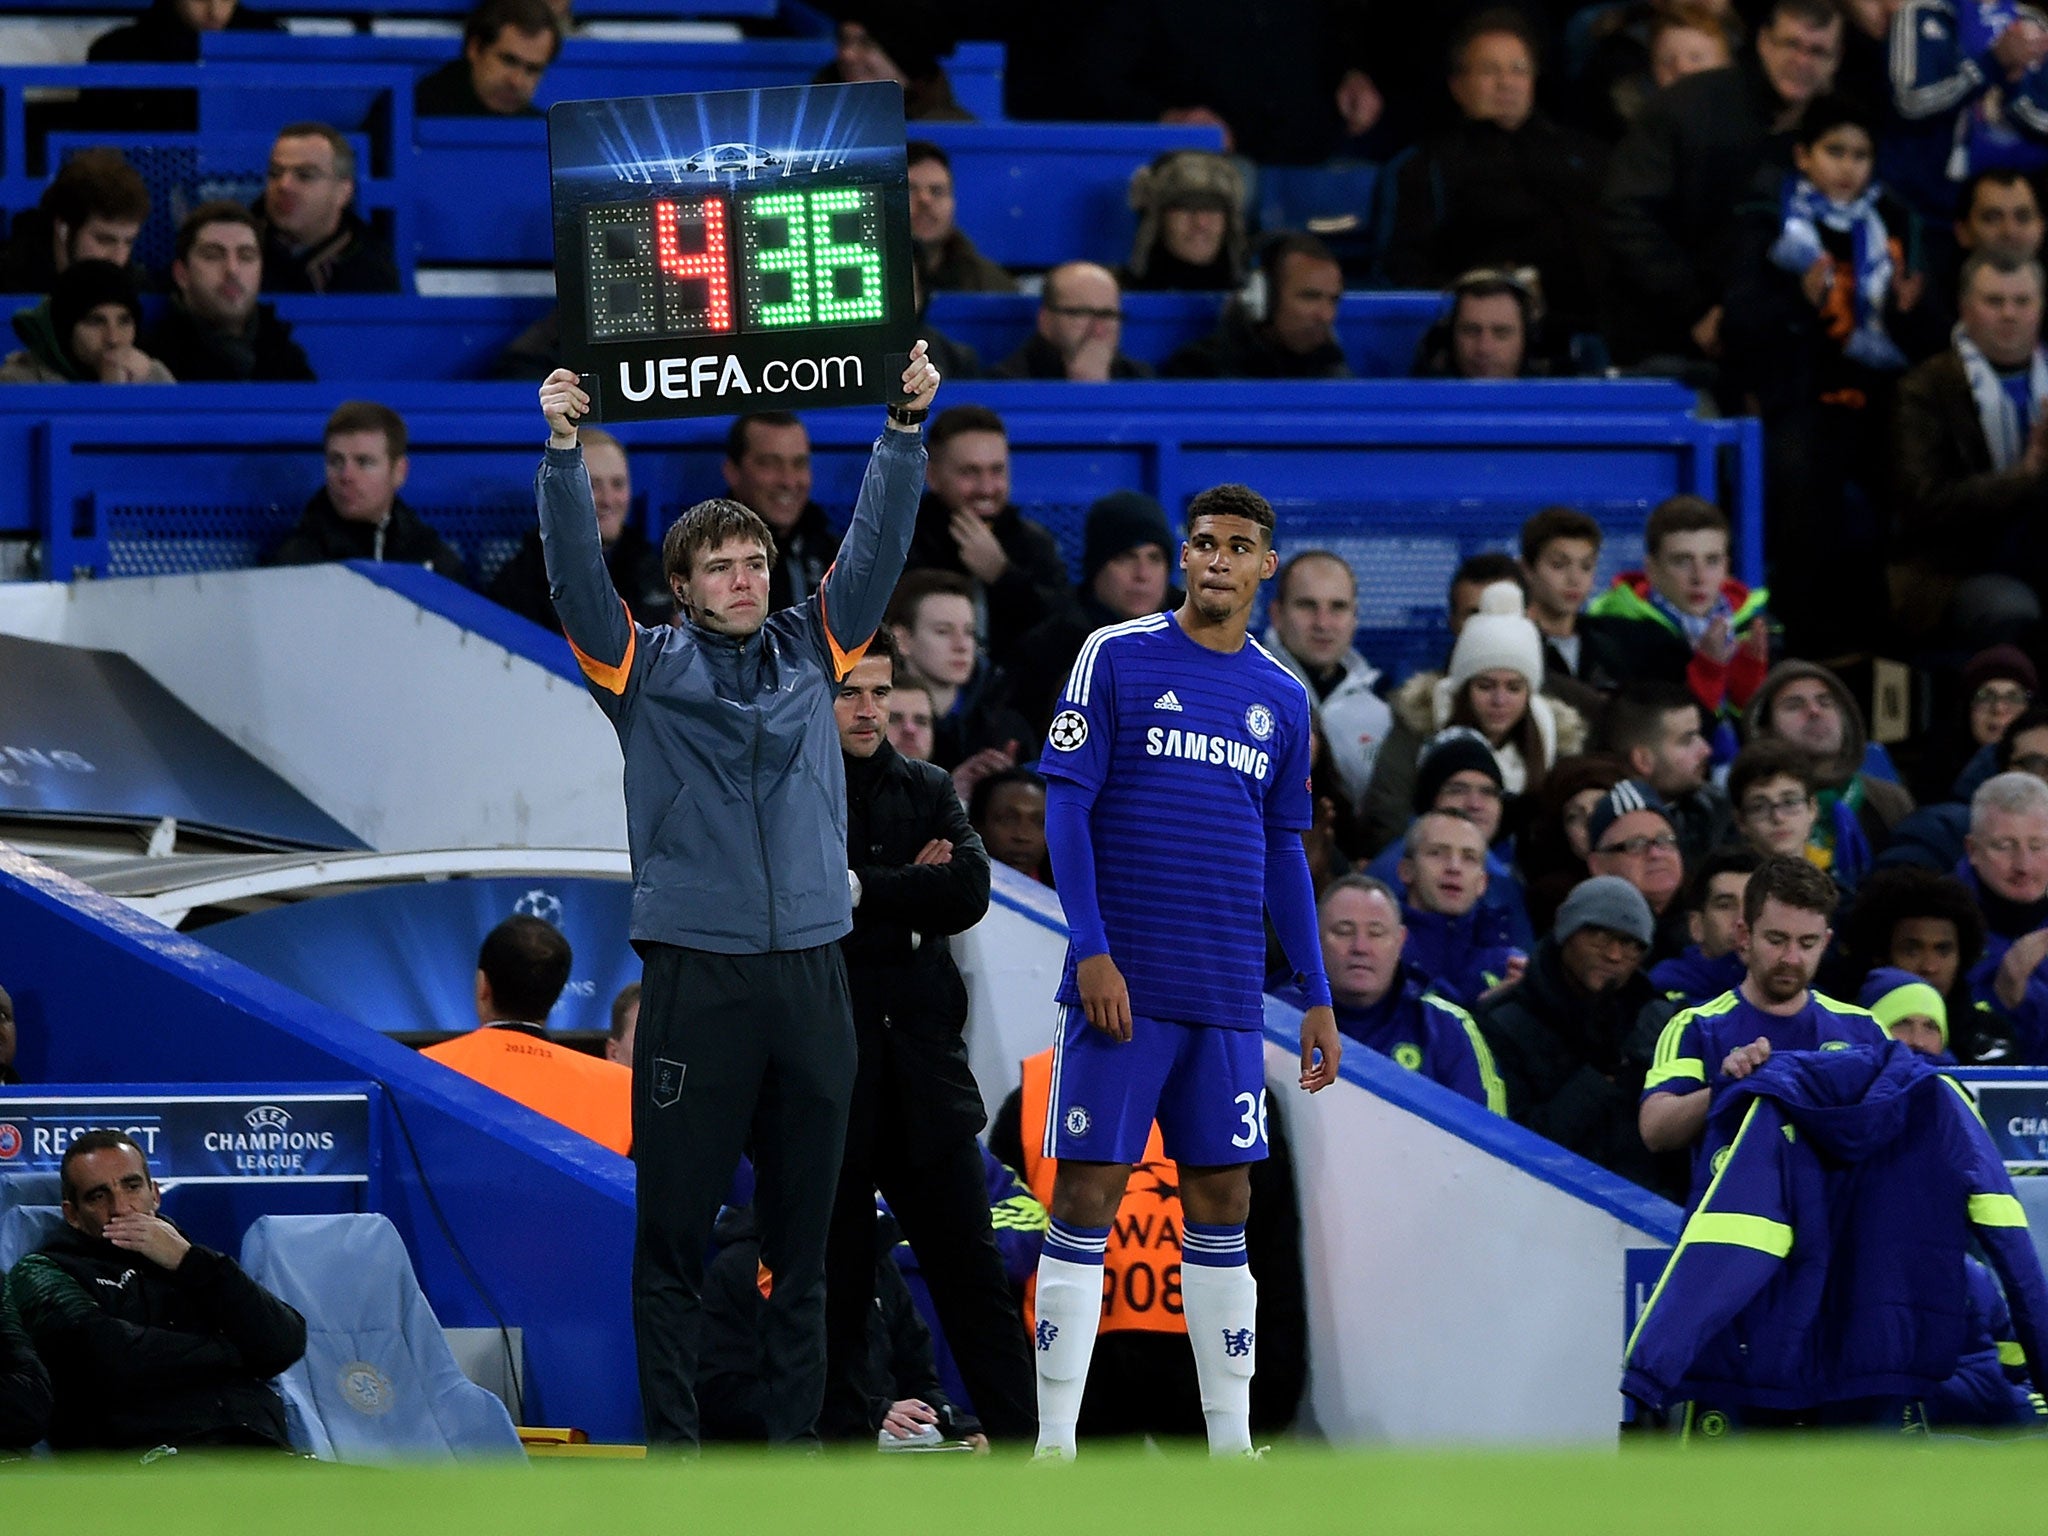 Ruben Loftus-Cheek comes on for his Chelsea debut